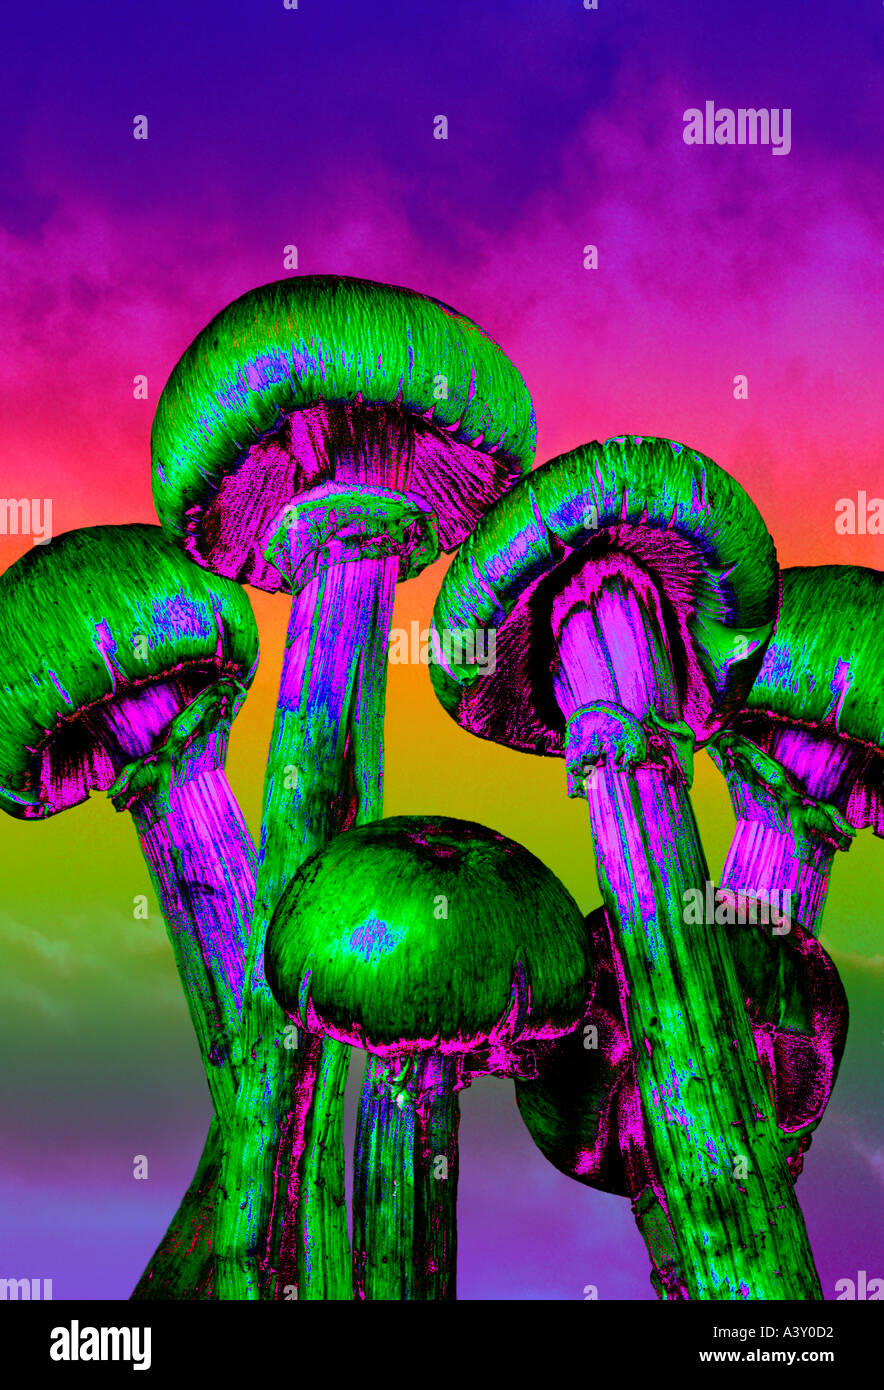 Les champignons magiques hallucinogènes Banque D'Images